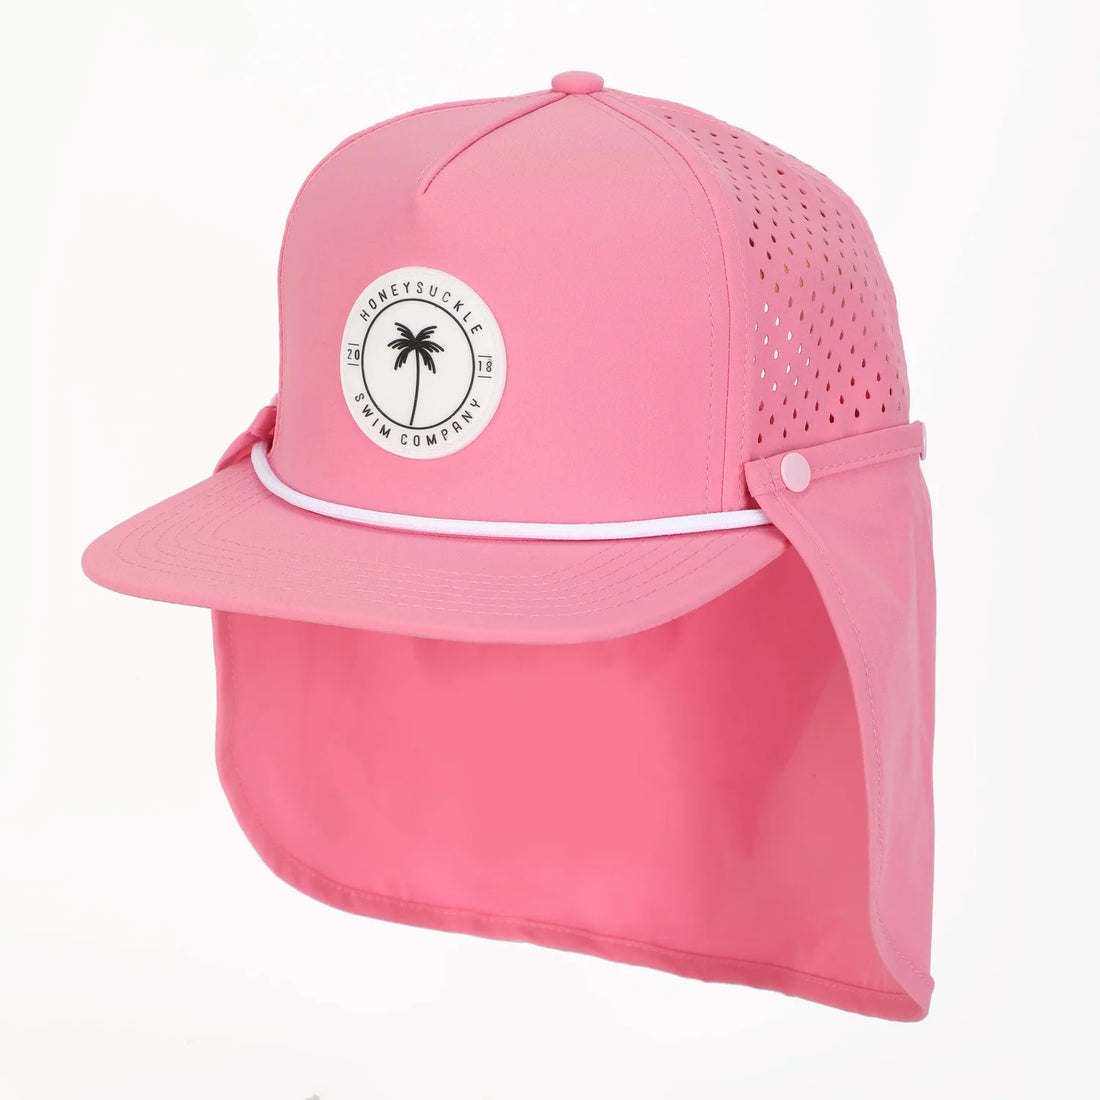 Honeysuckle Swim Co - Snapback Hat (Bright Pink)